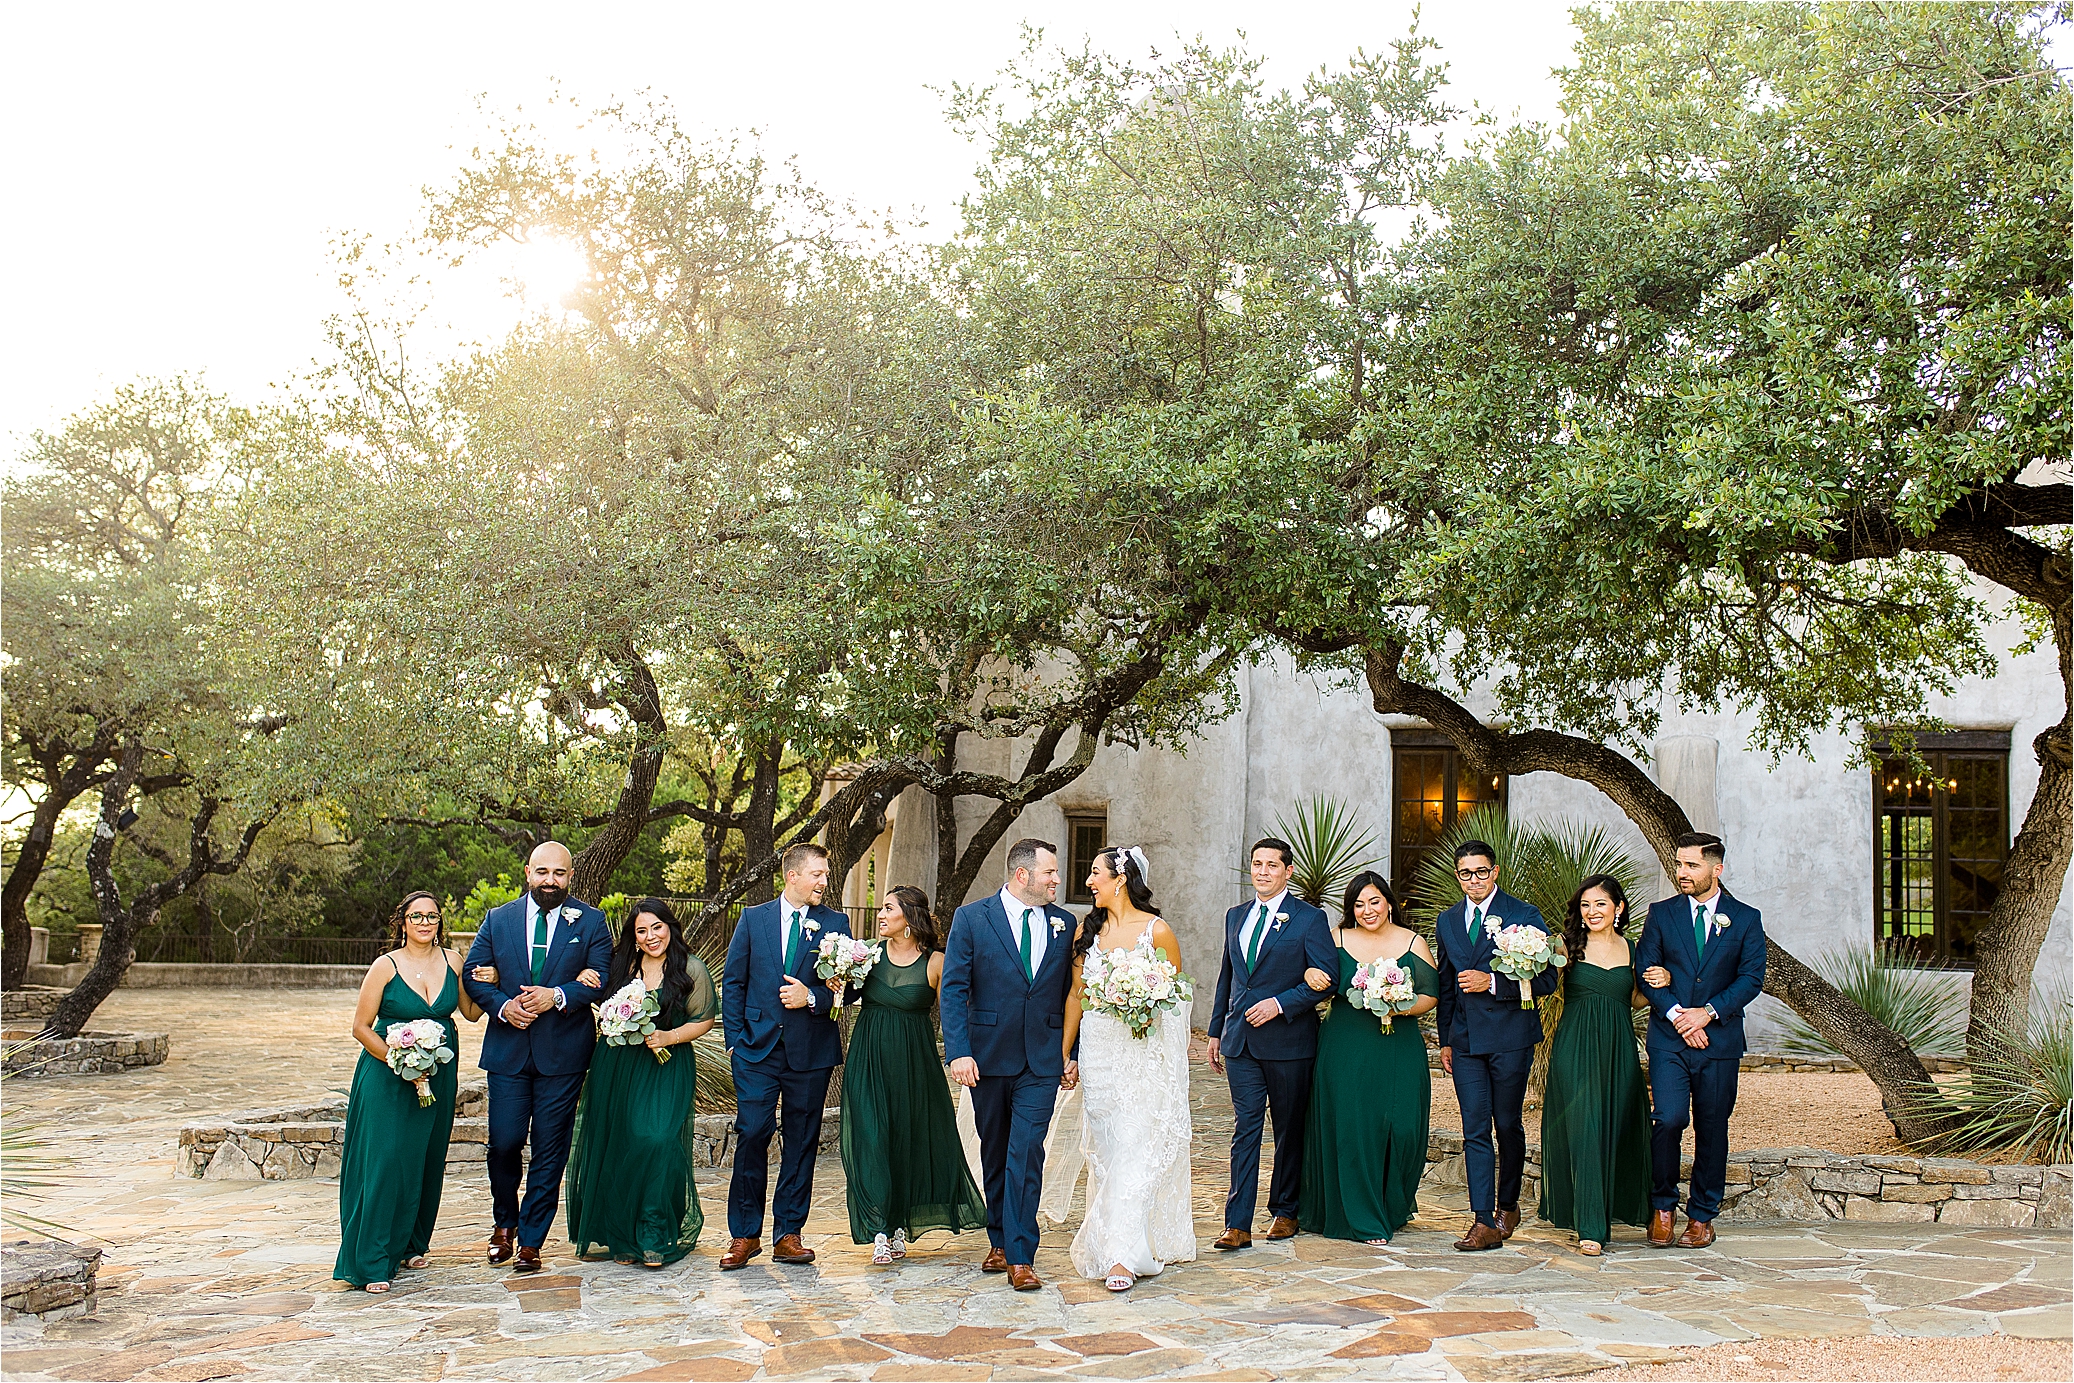 Lost Mission Wedding in Texas Hill Country near San Antonio | Jillian Hogan Photography